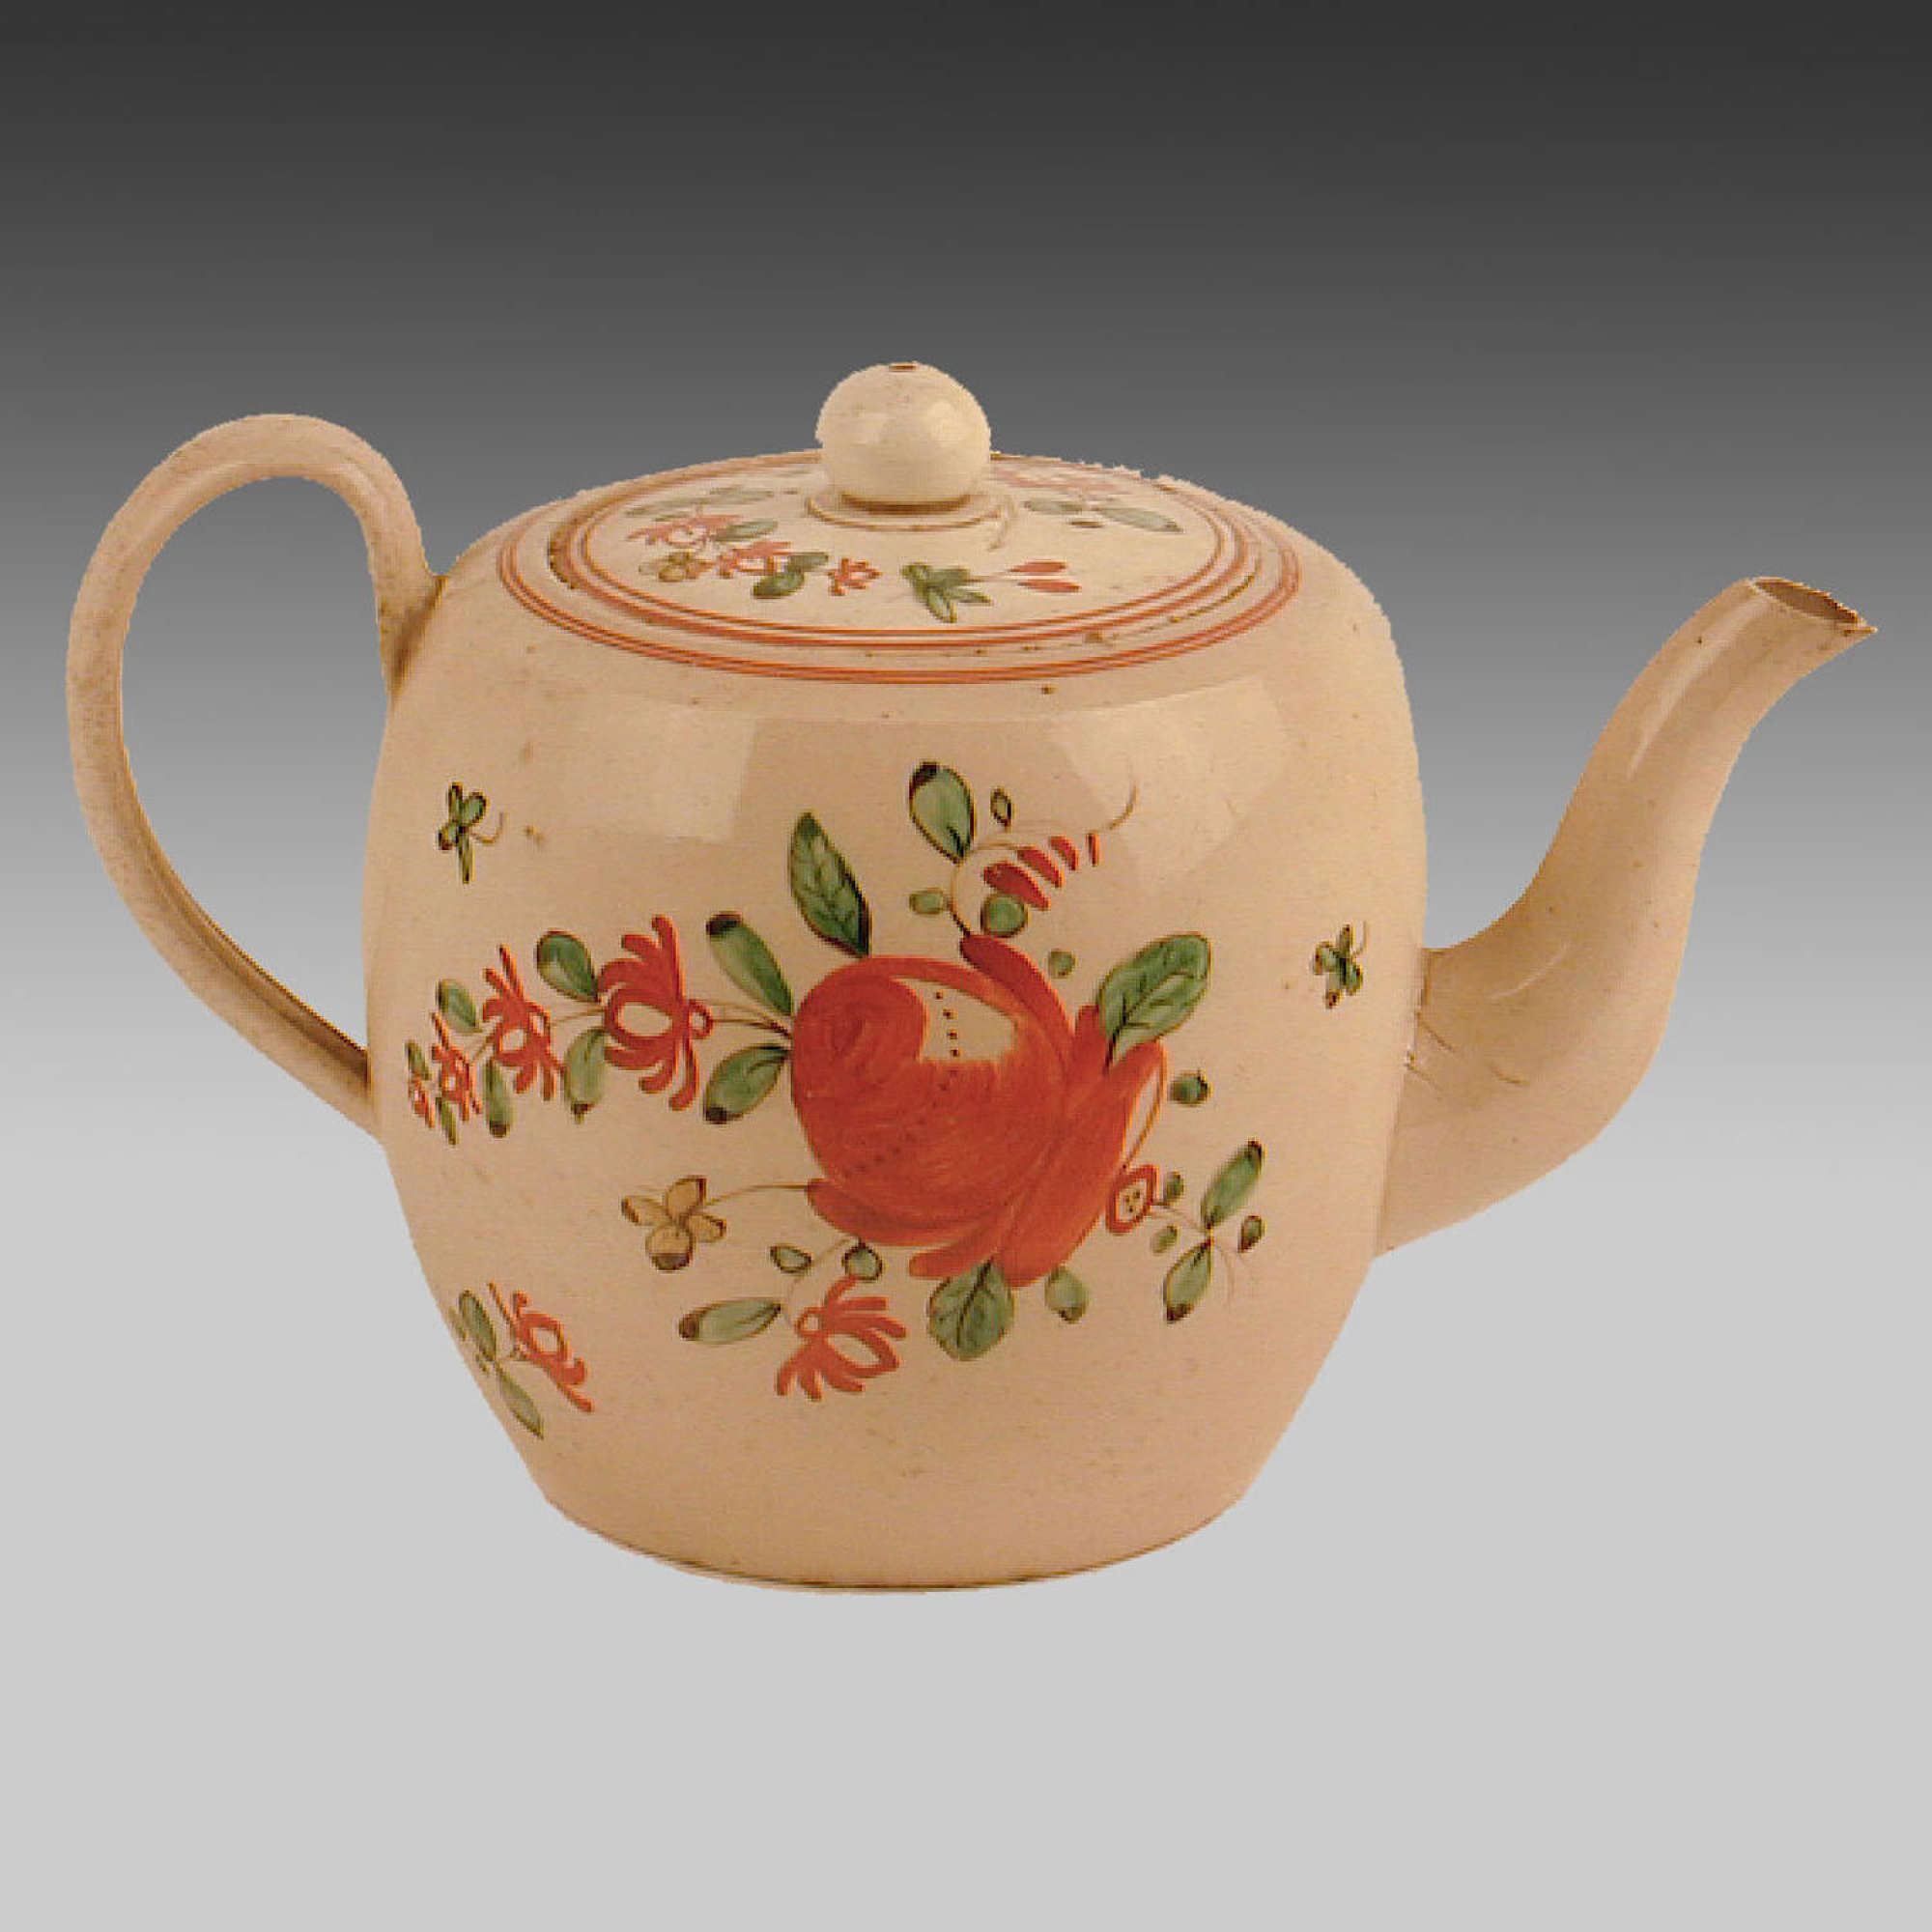 18th century creamware teapot